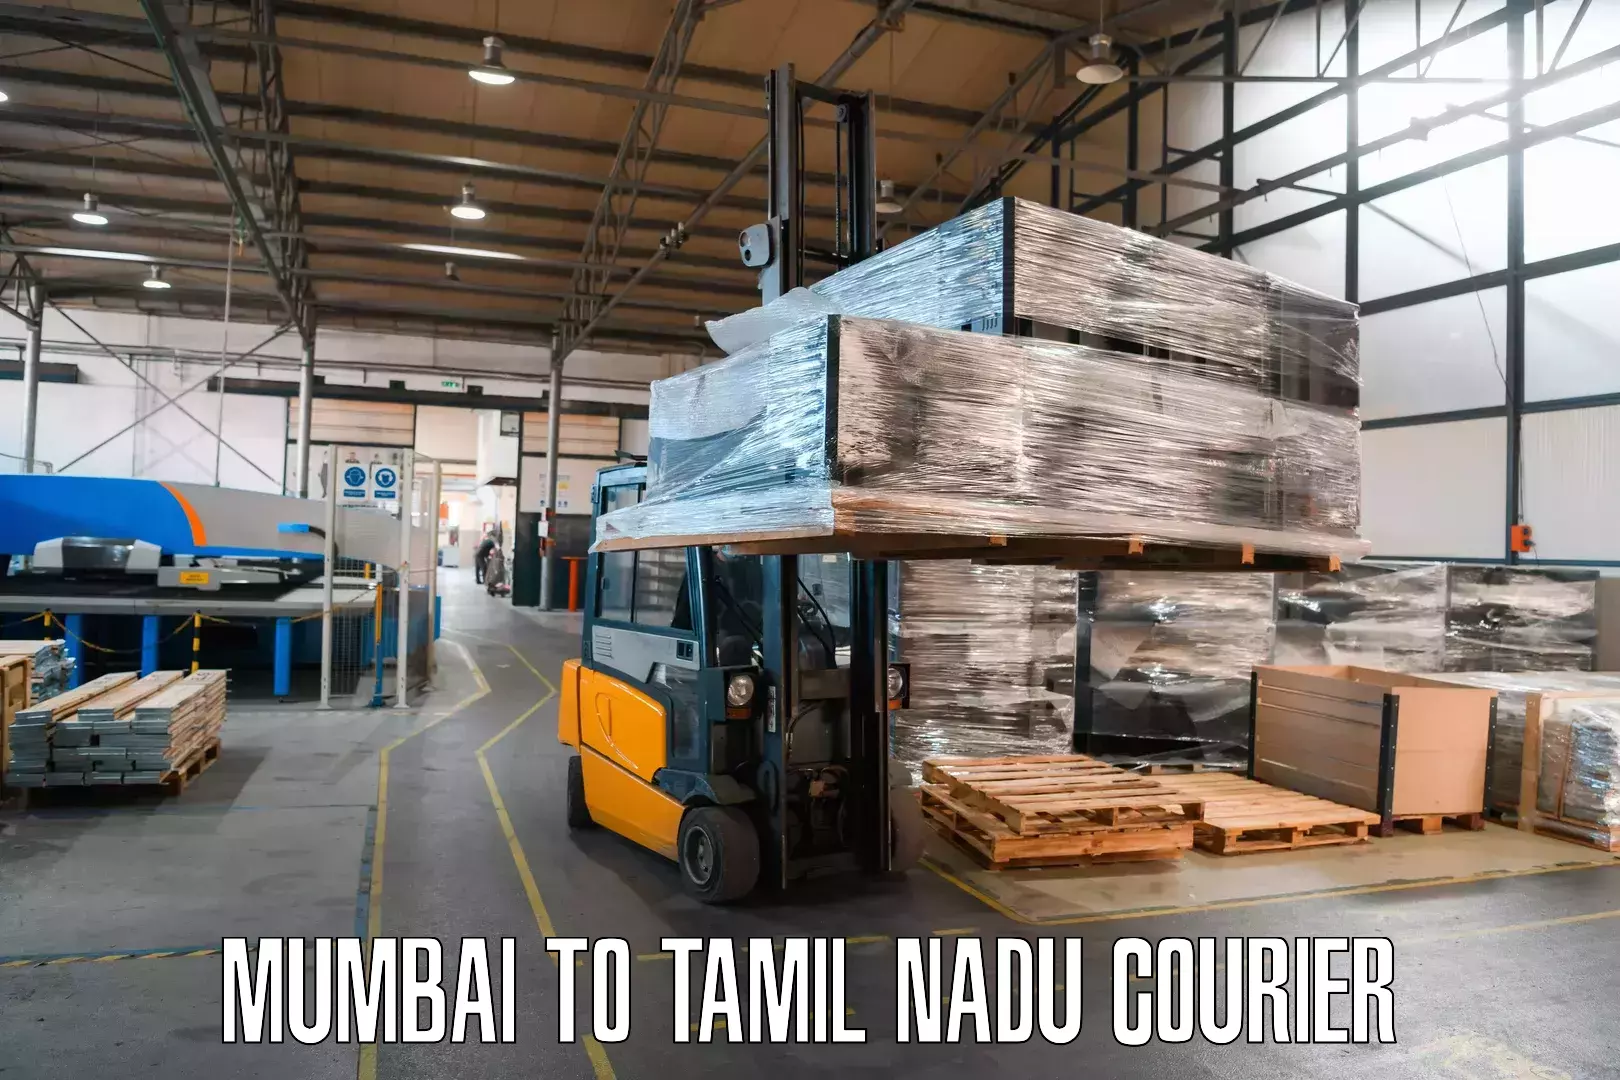 Courier service comparison Mumbai to Tamil Nadu